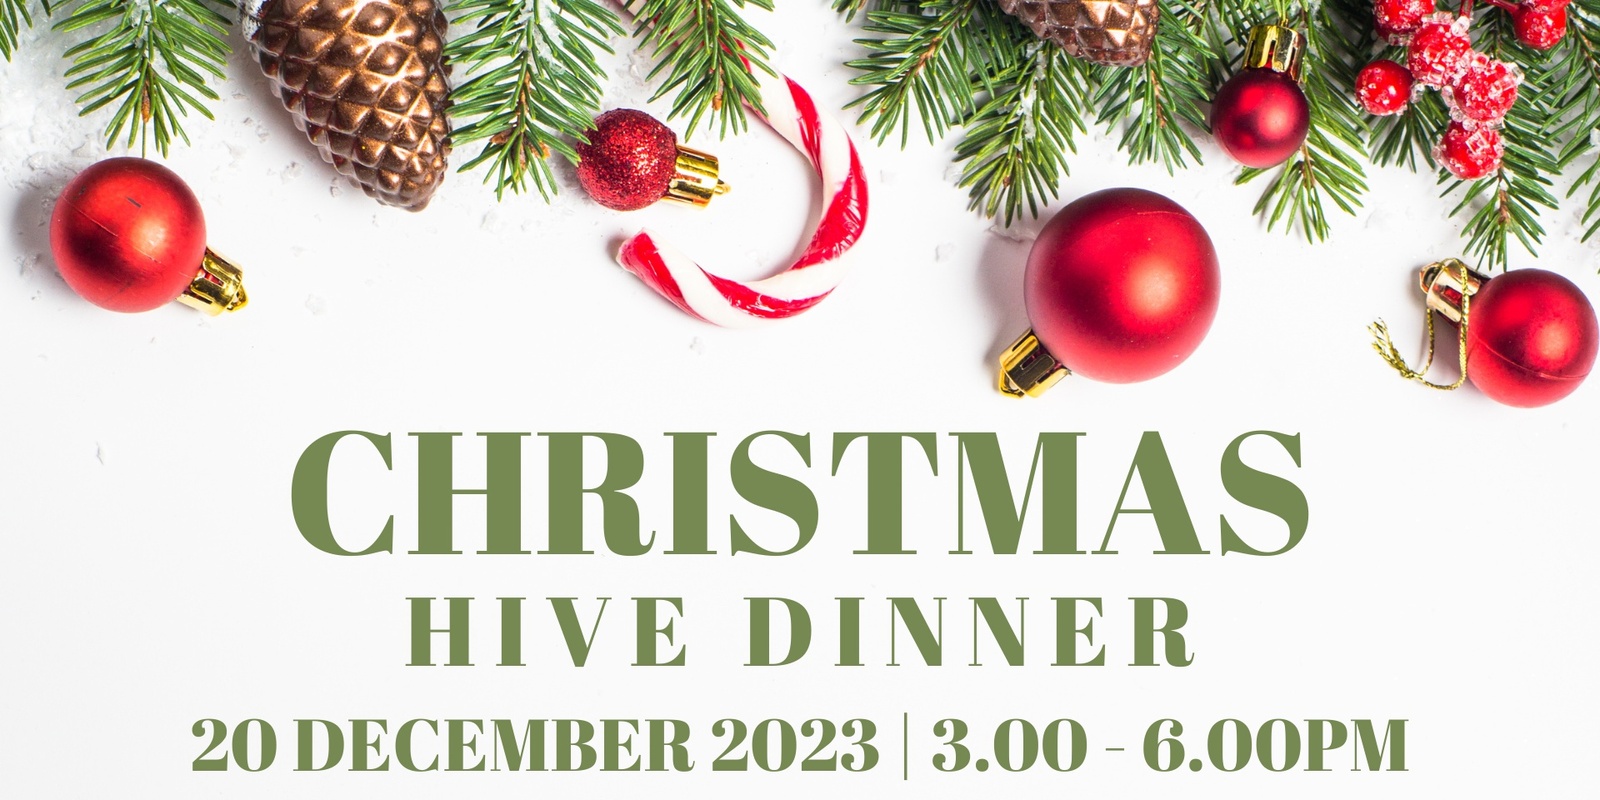 Banner image for Christmas Hive Dinner